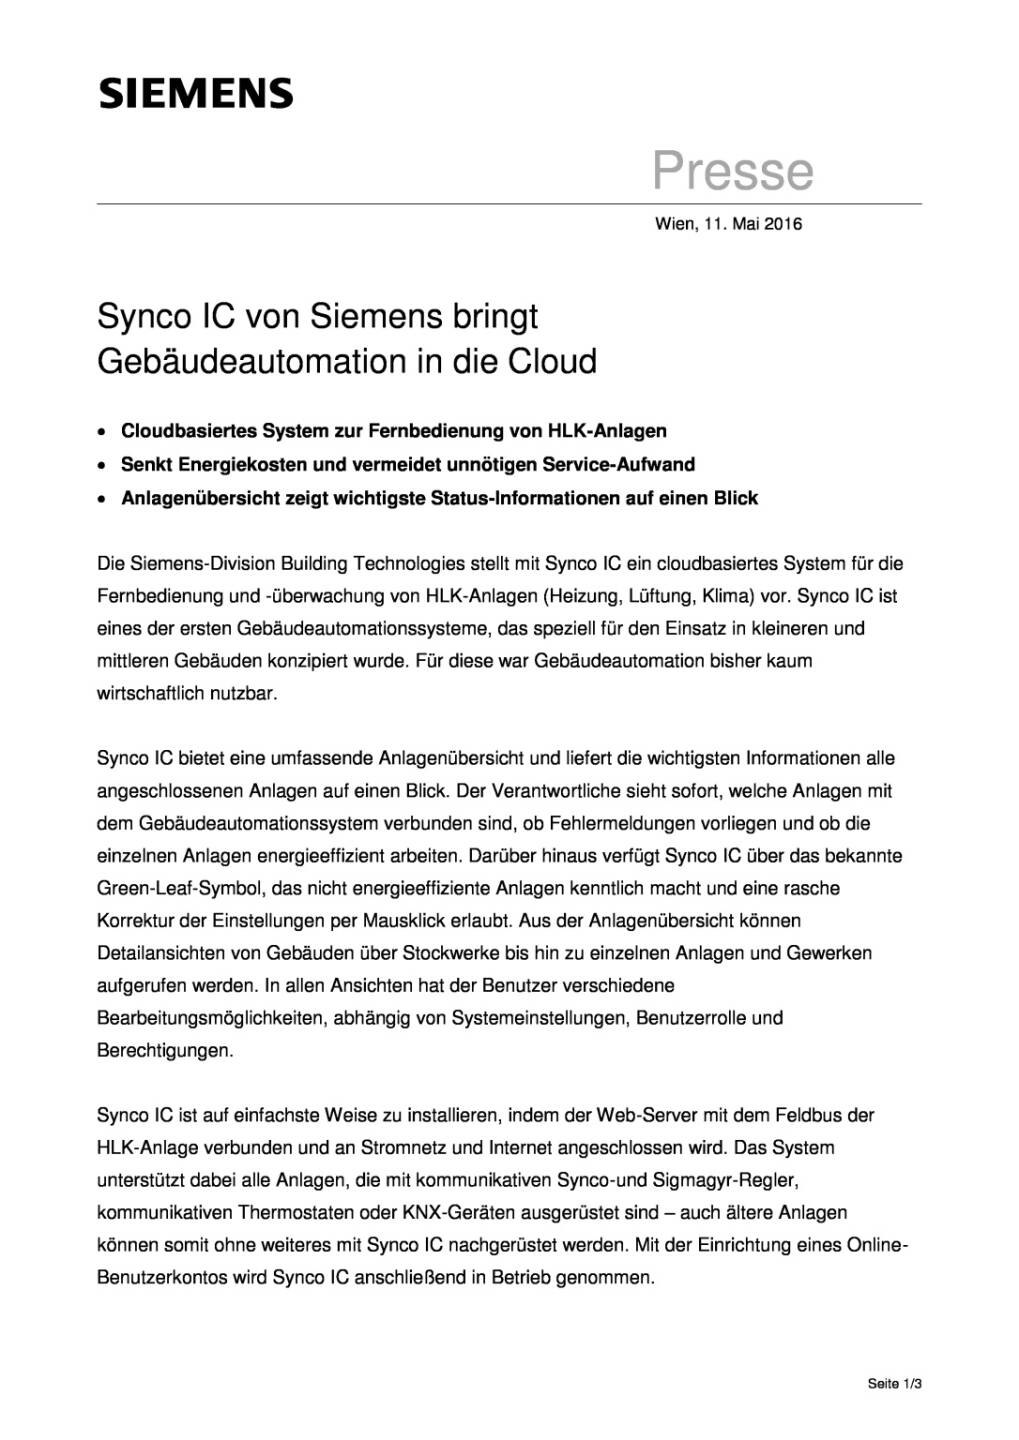 Siemens: Synco IC bringt Gebäudeautomation in die Cloud, Seite 1/3, komplettes Dokument unter http://boerse-social.com/static/uploads/file_1039_siemens_synco_ic_bringt_gebaudeautomation_in_die_cloud.pdf